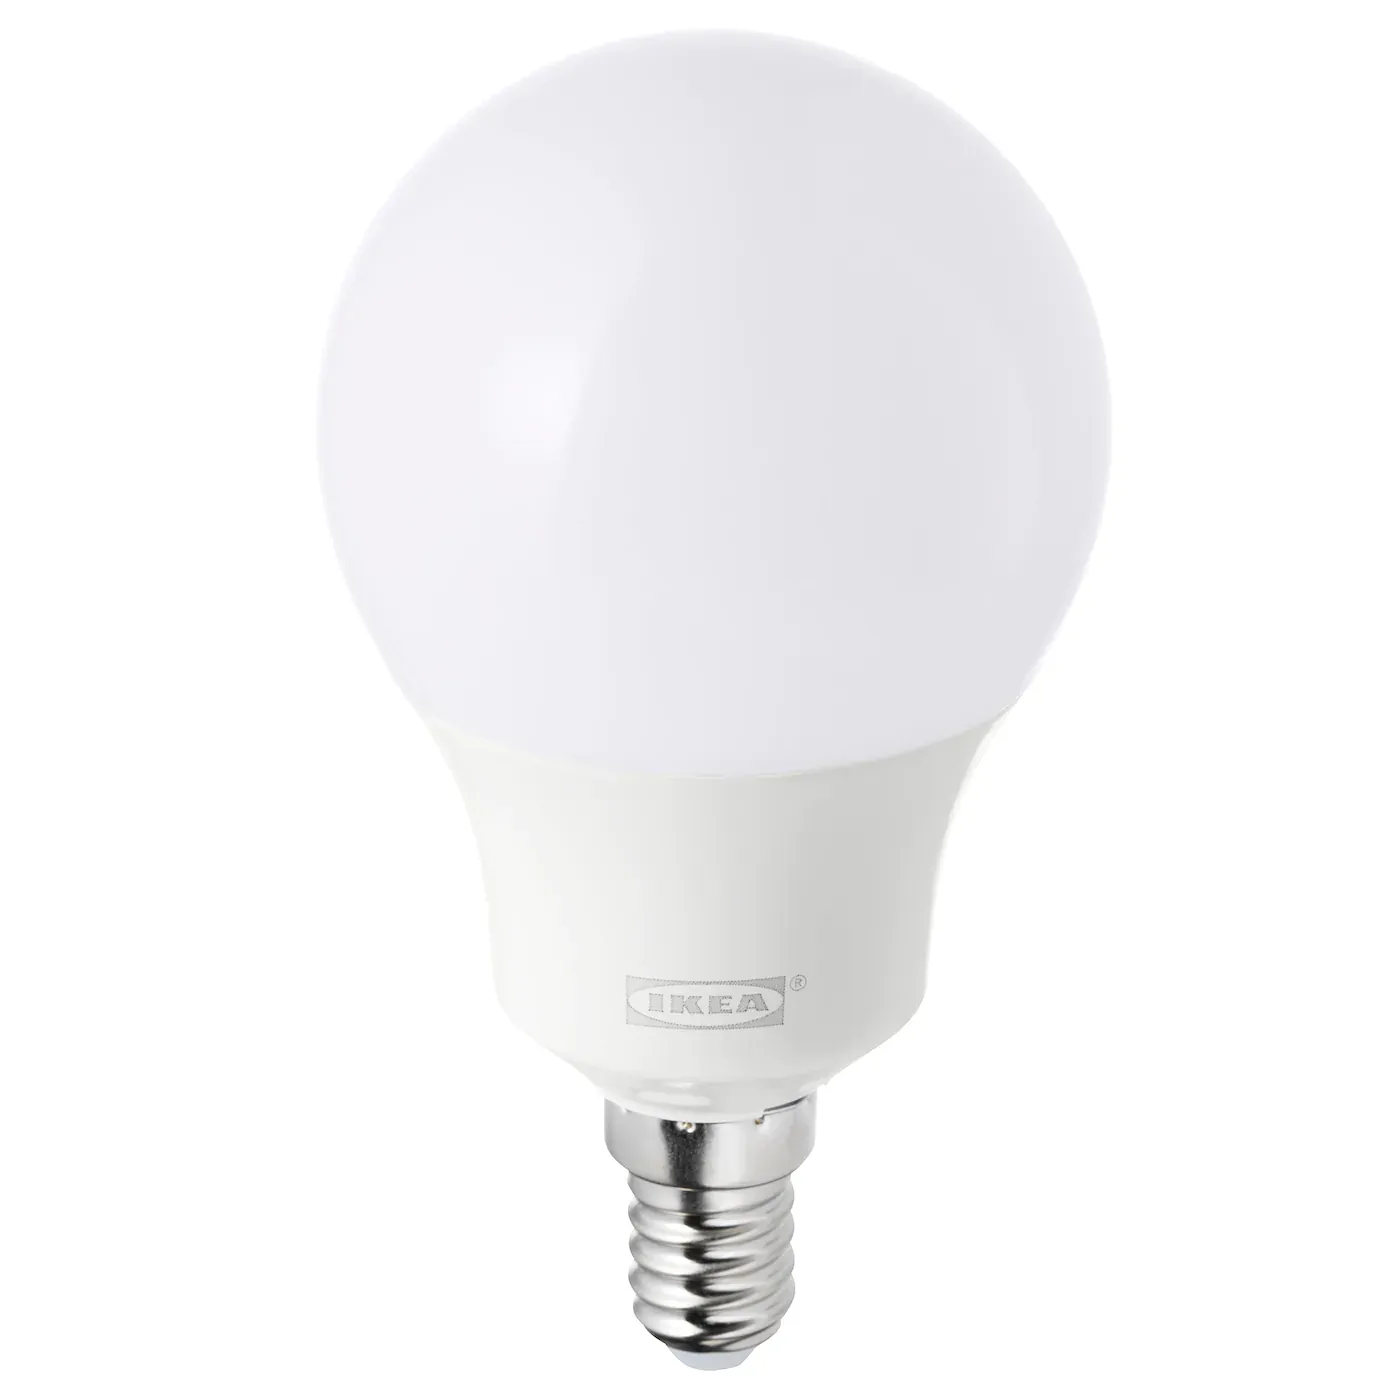 Tradfri LED bulb E14 400 lumen, dimmable, white spectrum, opal white